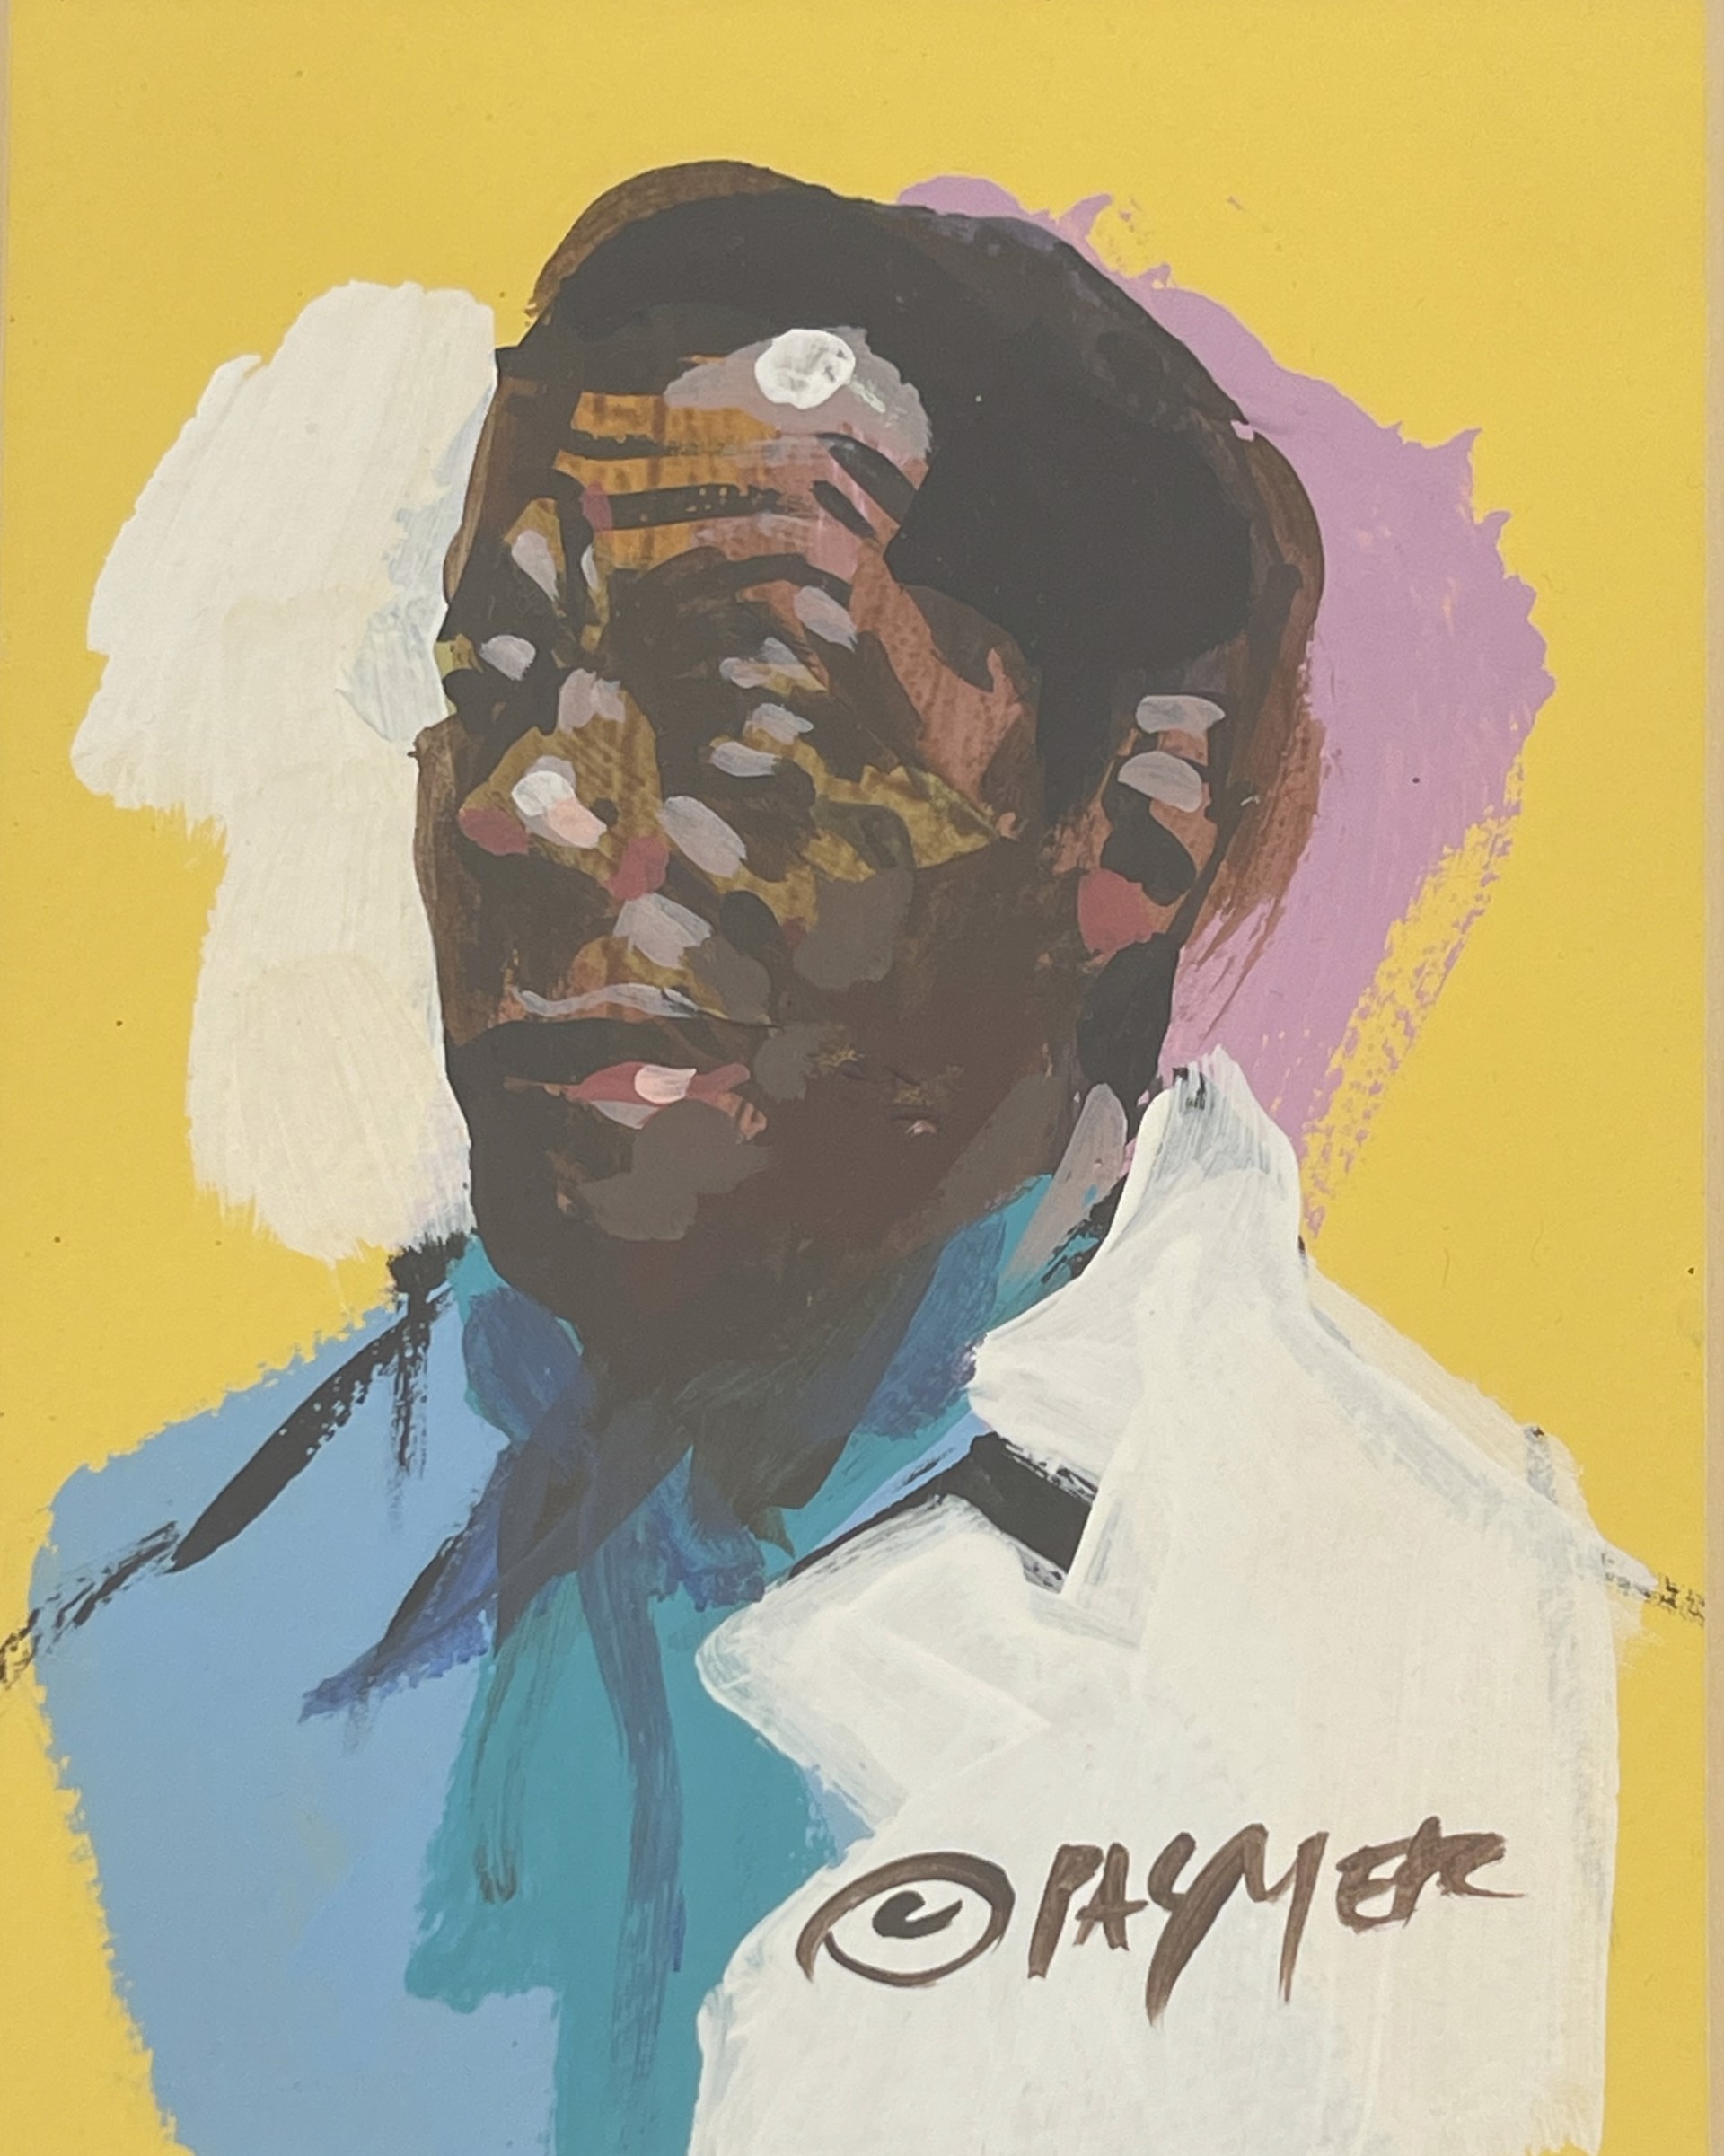 James Baldwin 2022 #2 by Charly Palmer